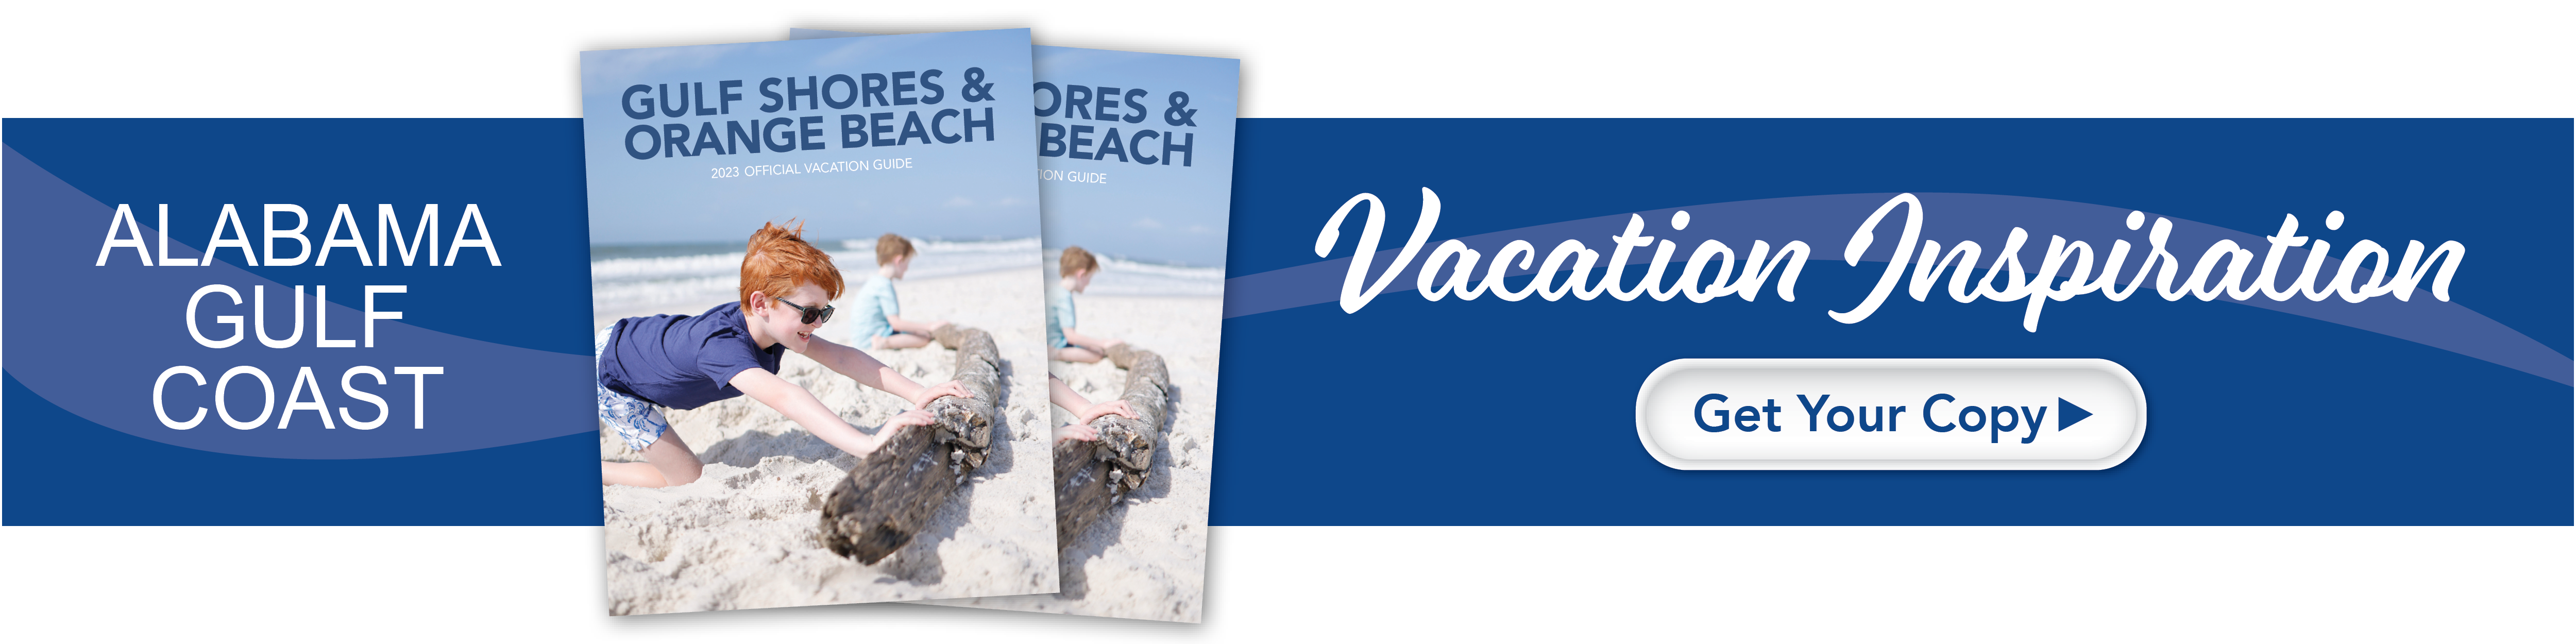 Vacation Guide Gulf Shores & Orange Beach 